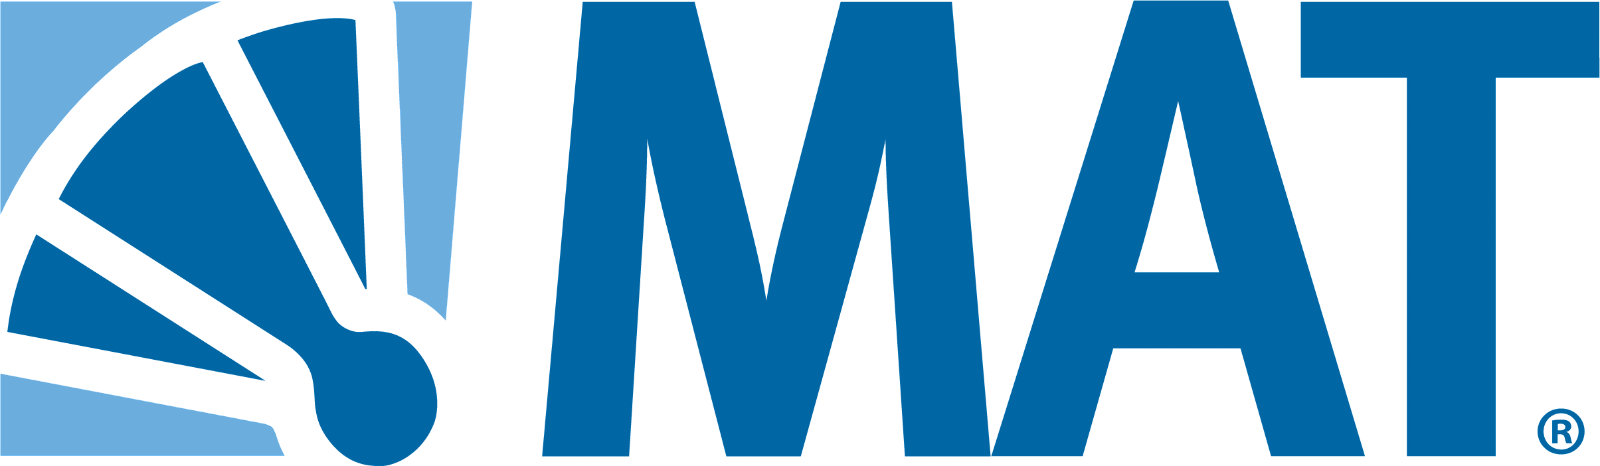 Metropolitan Air Technology logo